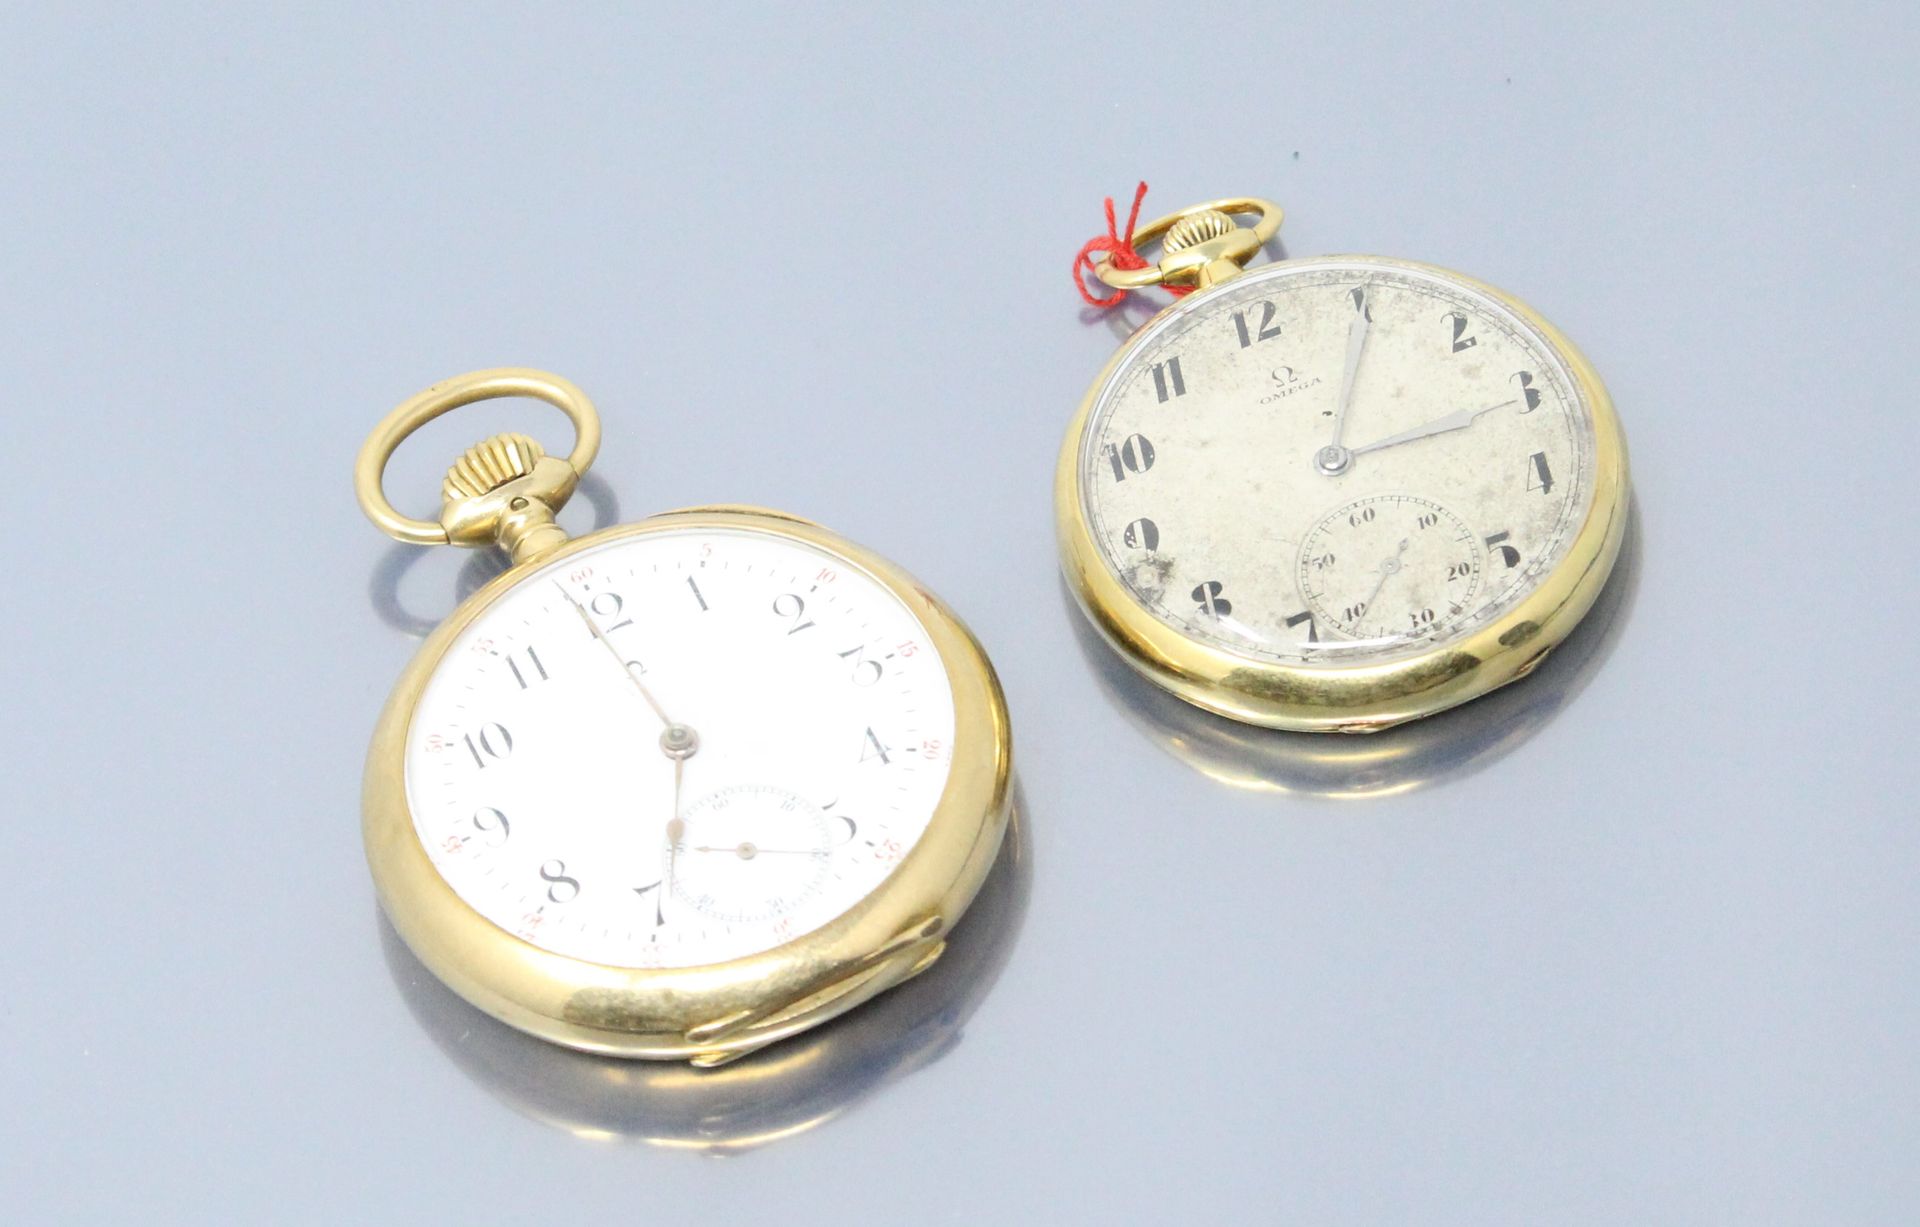 Null 欧米茄

一套两只18K(750)黄金古瑟表，一只有白色珐琅表盘，另一只有灰色珐琅表盘。 阿拉伯数字表示小时和分钟。

碗上有扭索纹或图案的装饰。

&hellip;